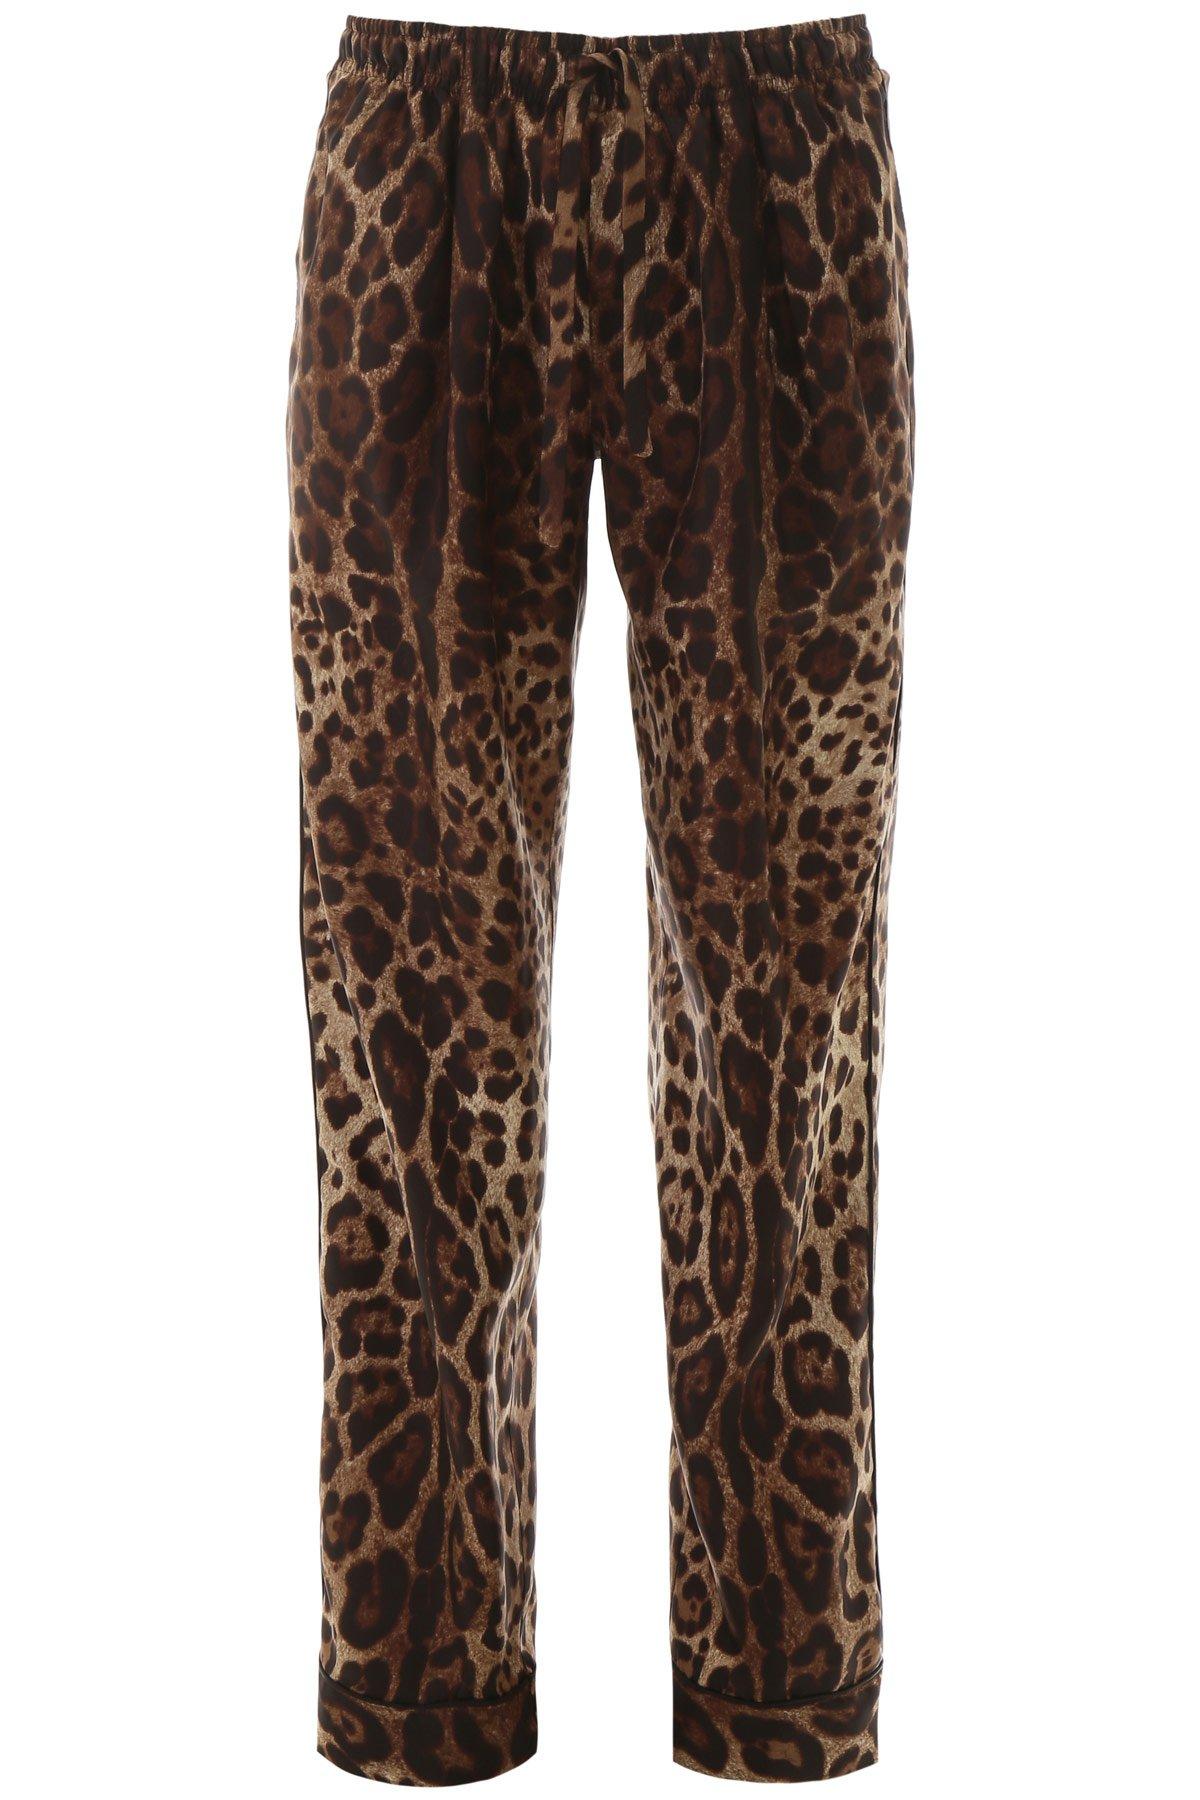 Dolce & Gabbana Silk Leopard Pajama Pants in Brown for Men - Lyst